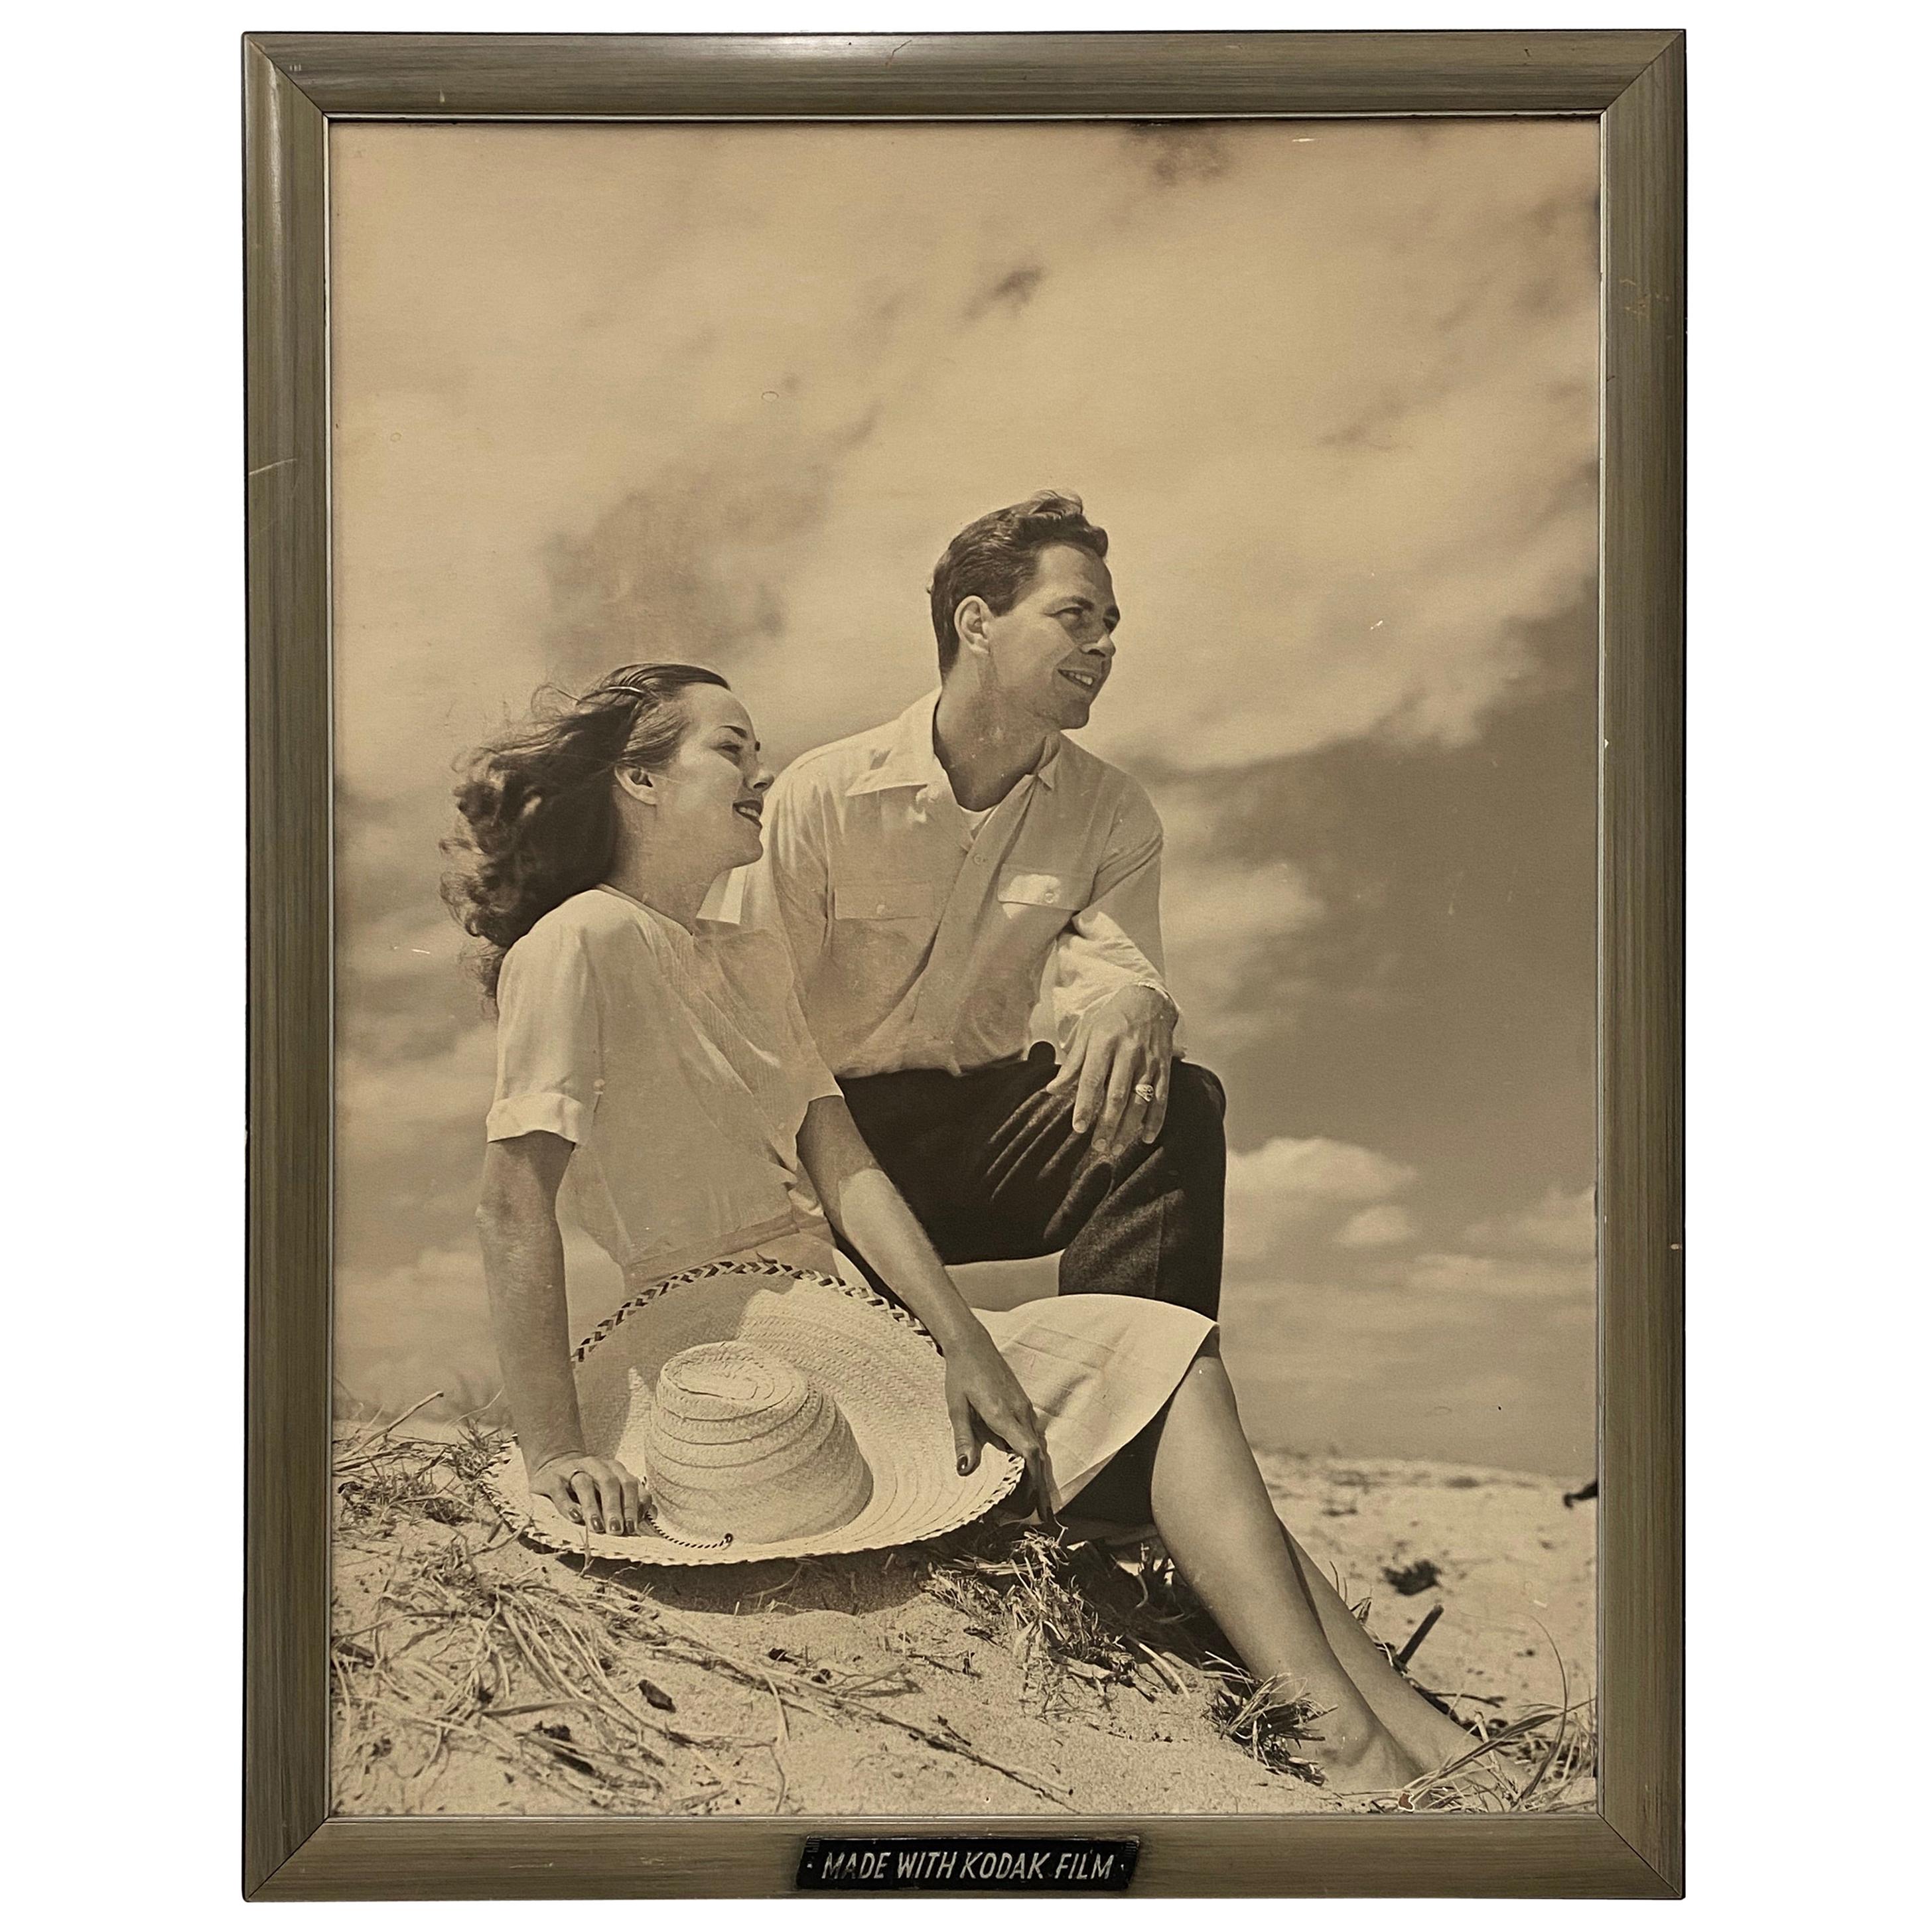 Großformatiger „Kodak-Film“-Werbeplakat im Vintage-Stil, um 1950